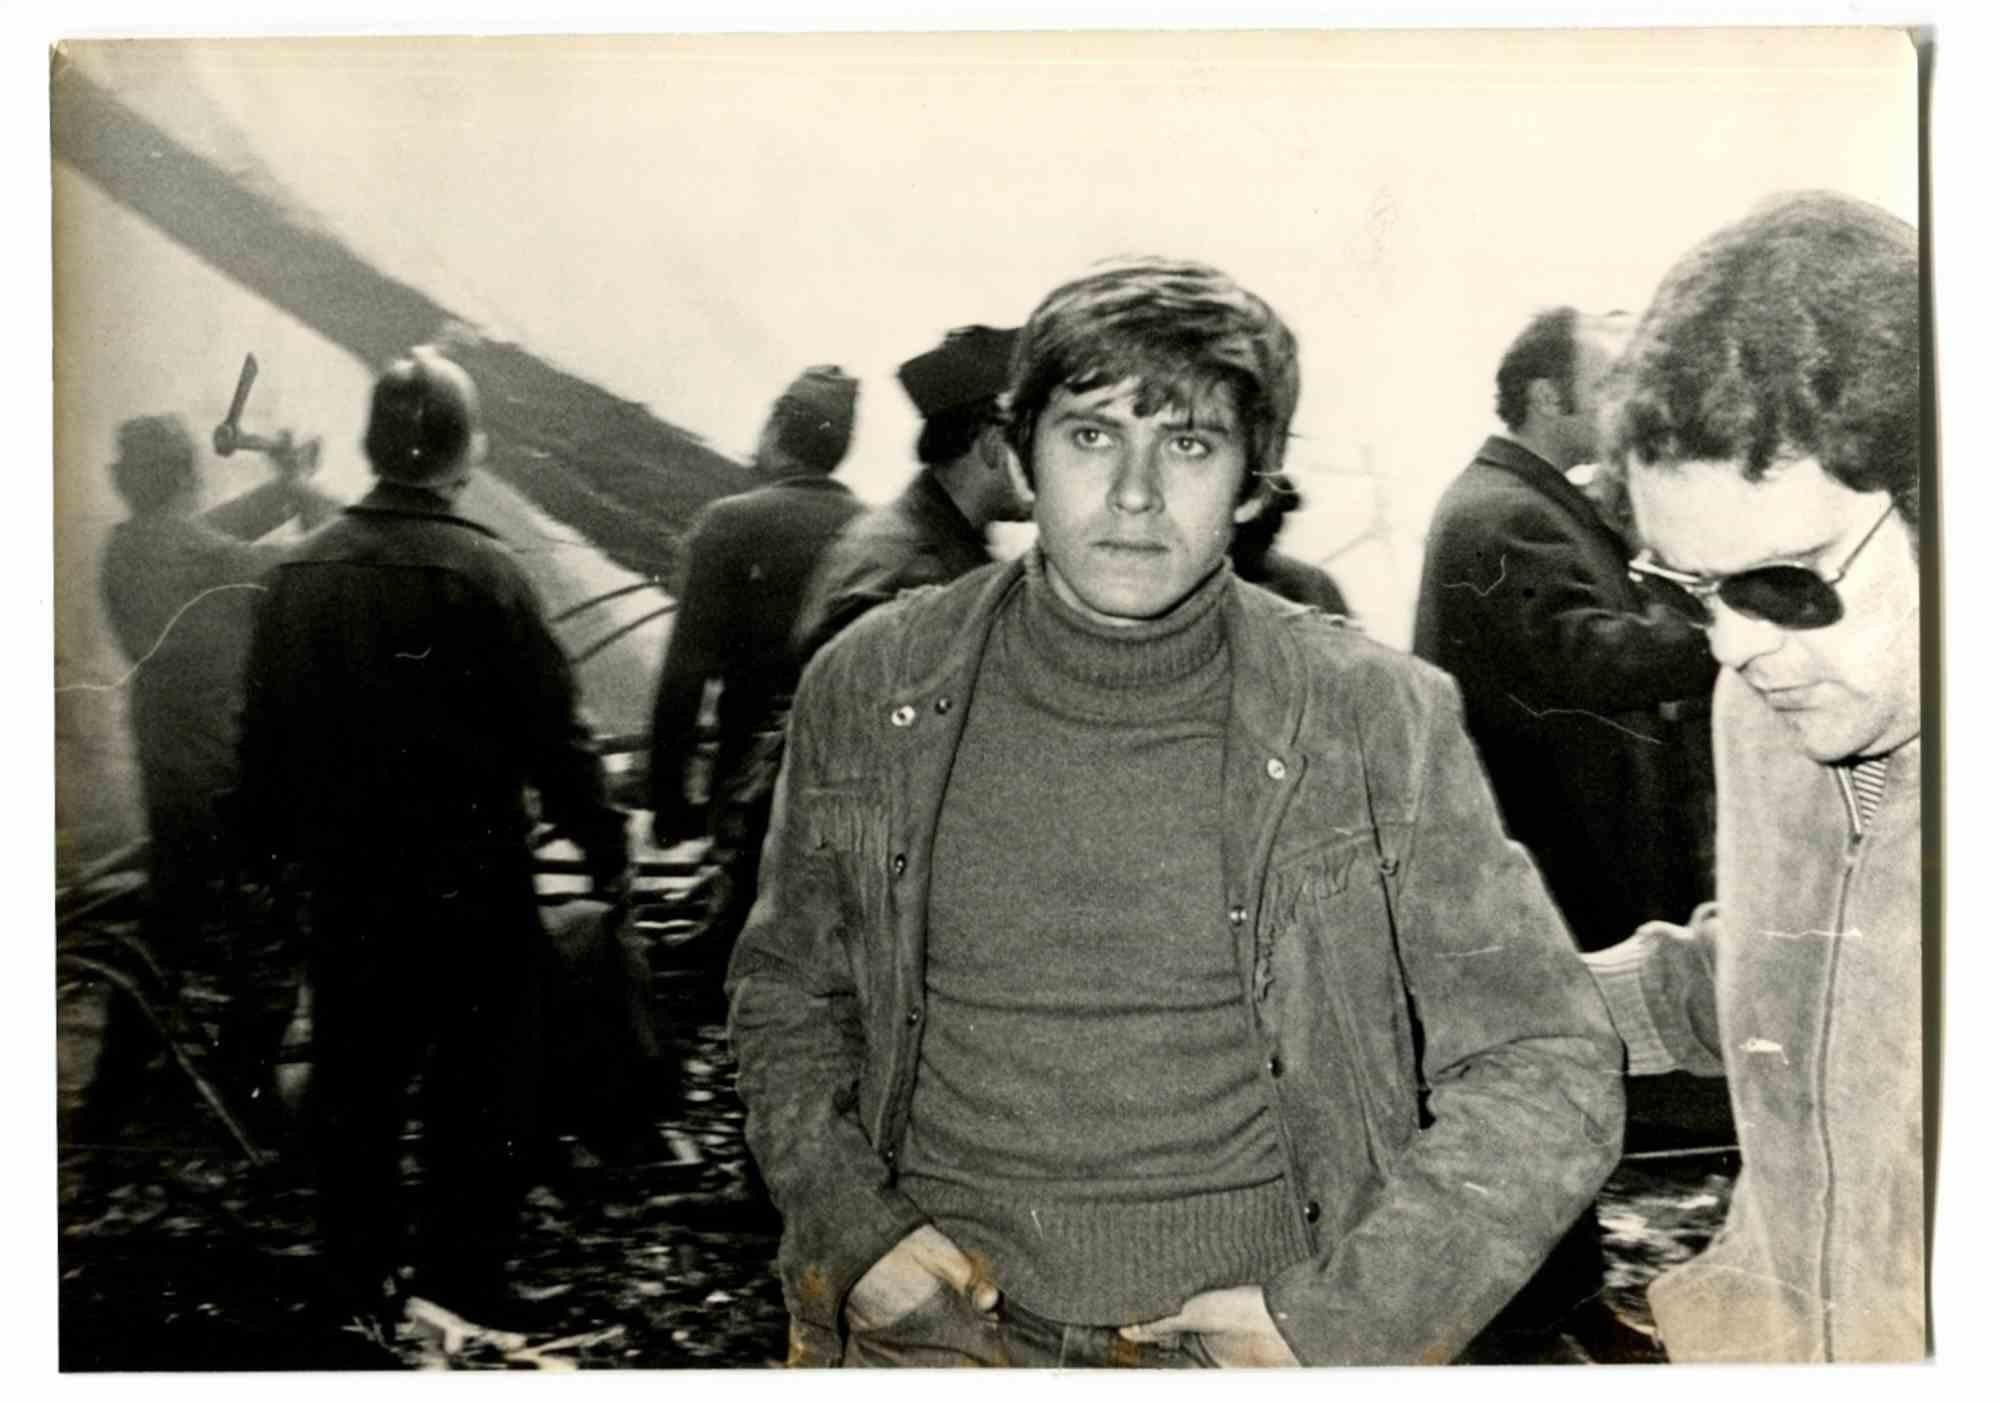 Gianni Morandi - Vintage Photo - 1970s